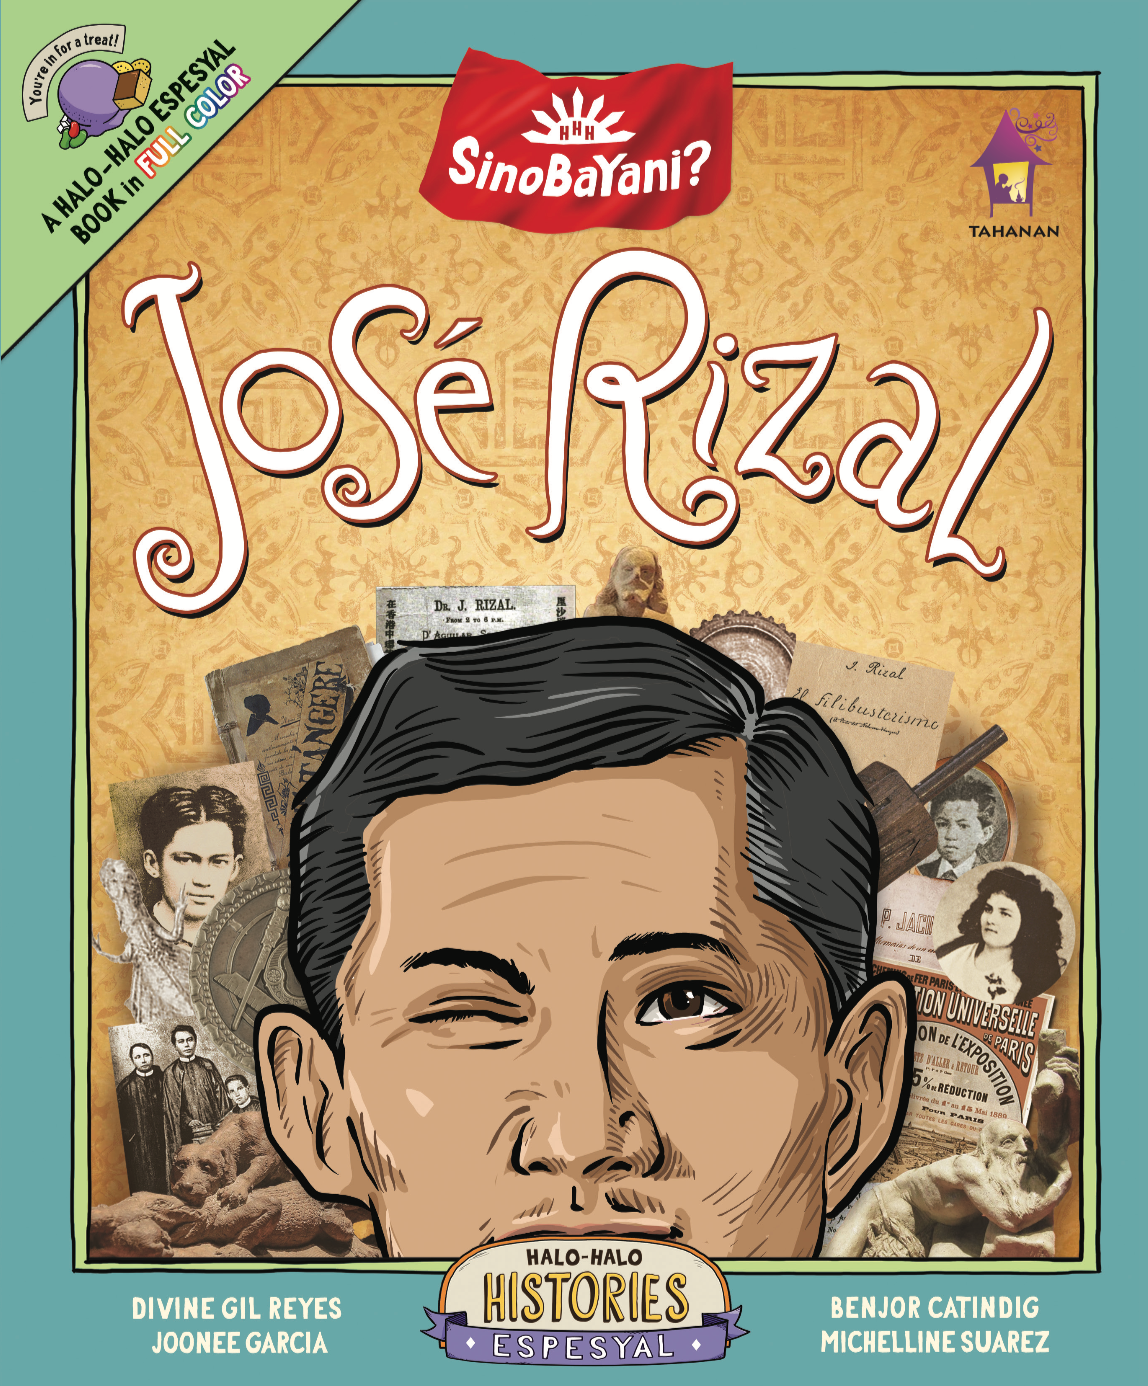 Sinobayani Jose Rizal by Divine Gil Reyes; Michelline Suarez; Joonee Garcia